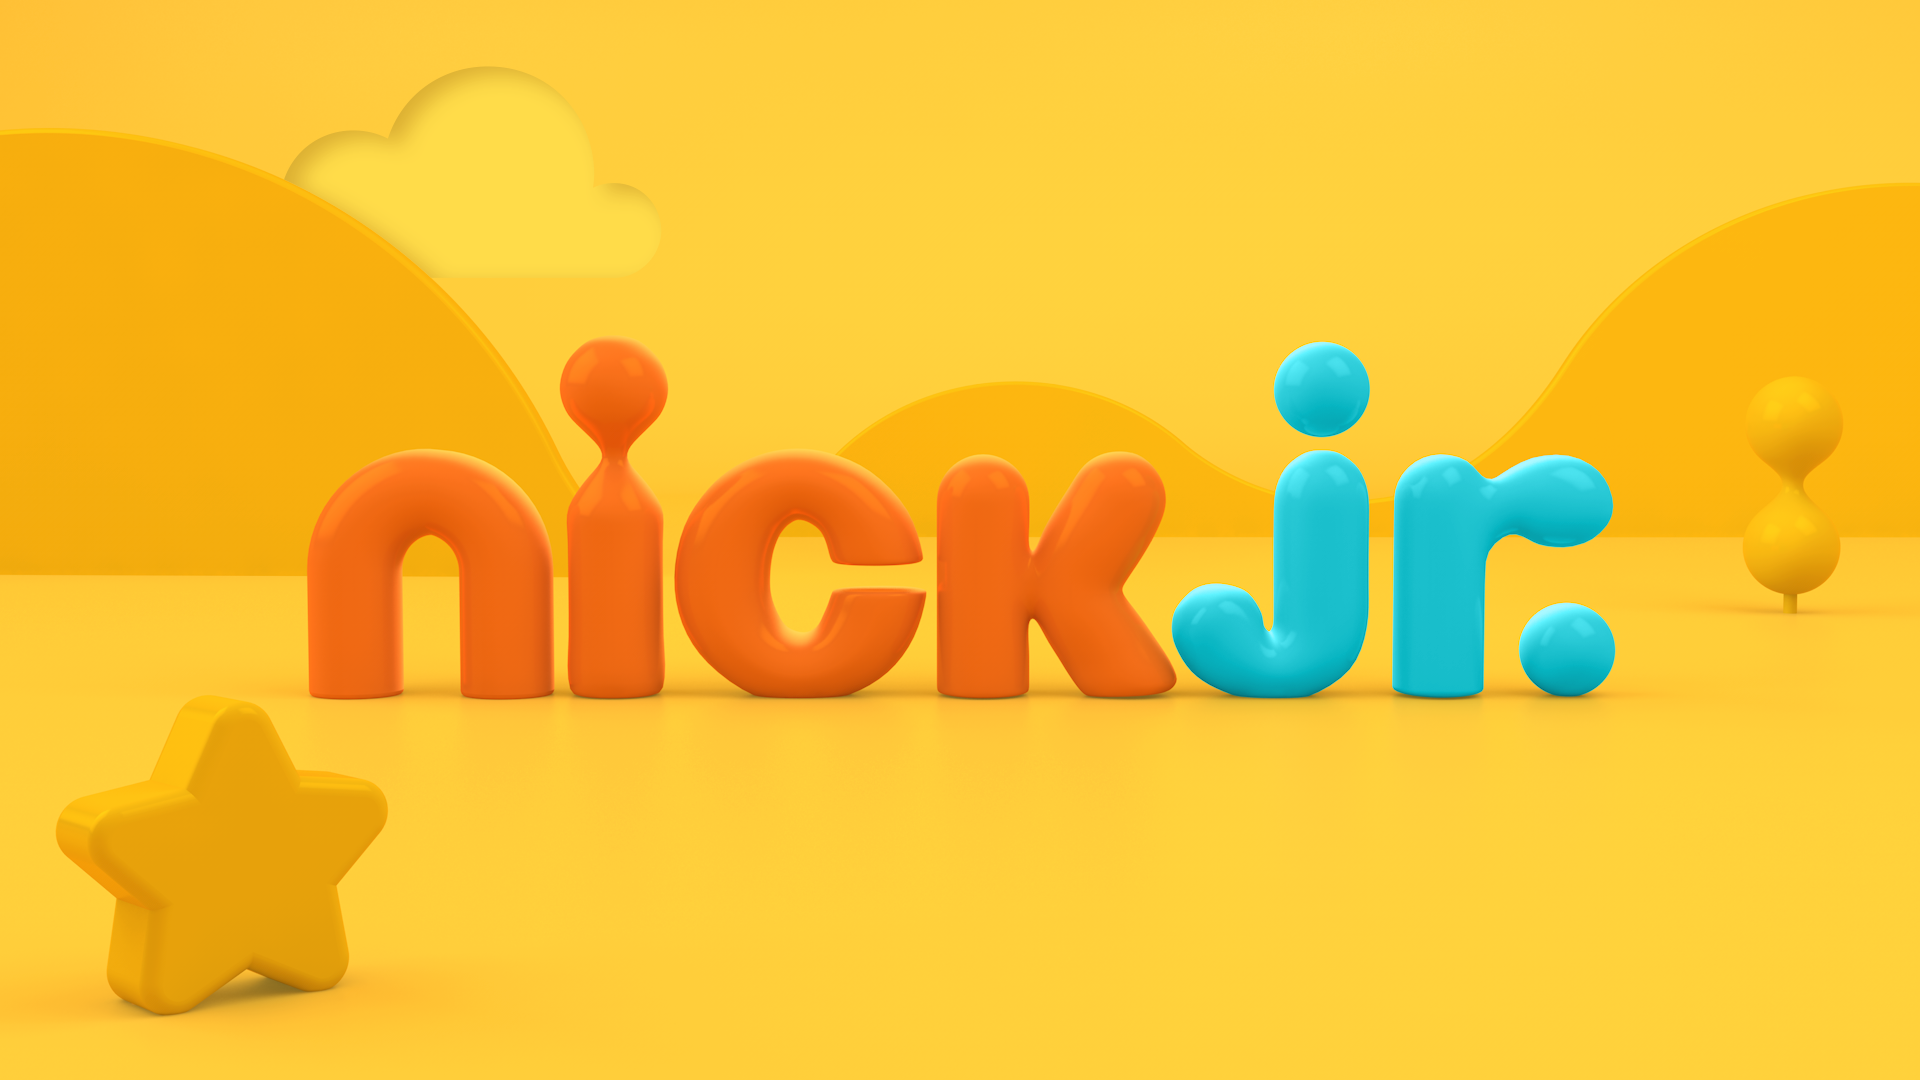 Nick channel. Nick Jr. Nick Jr Телеканал. Nick Jr логотип. Телеканал ник Джуниор.